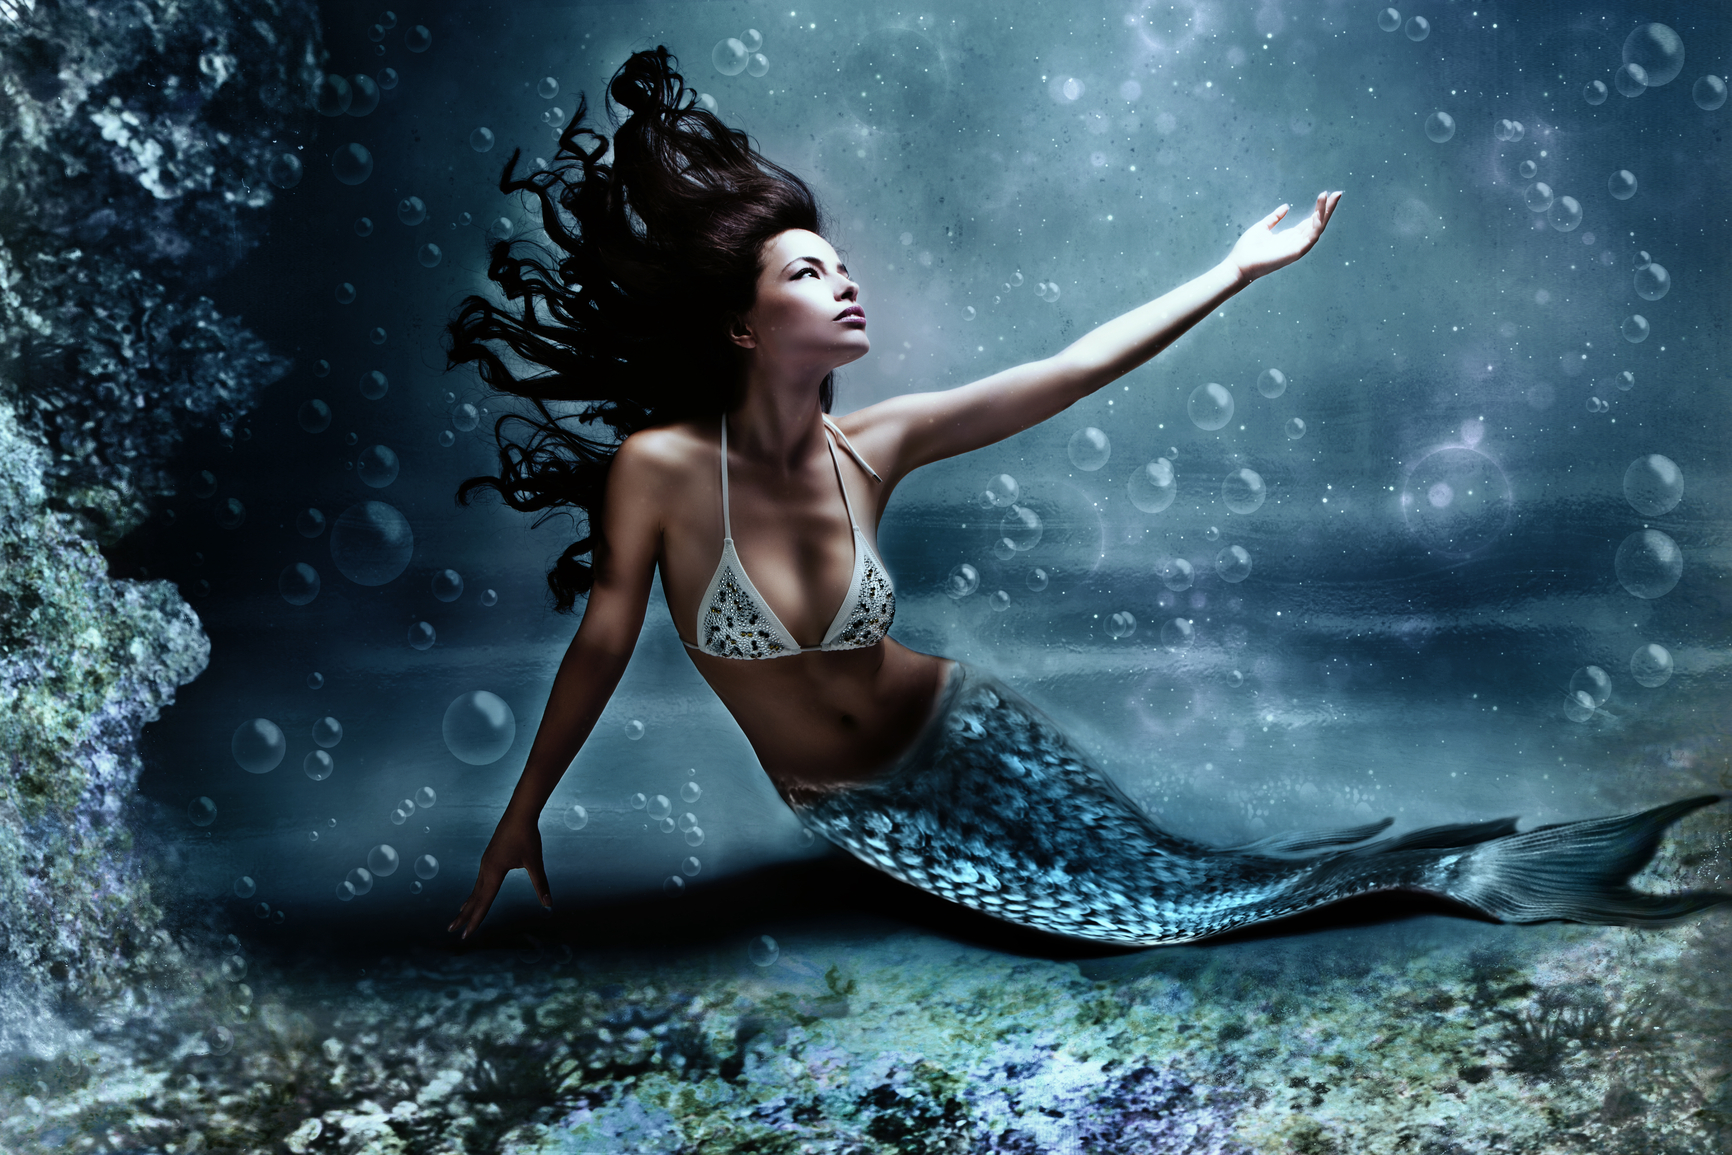 Mythology being, mermaid in underwater scene, photo compilation